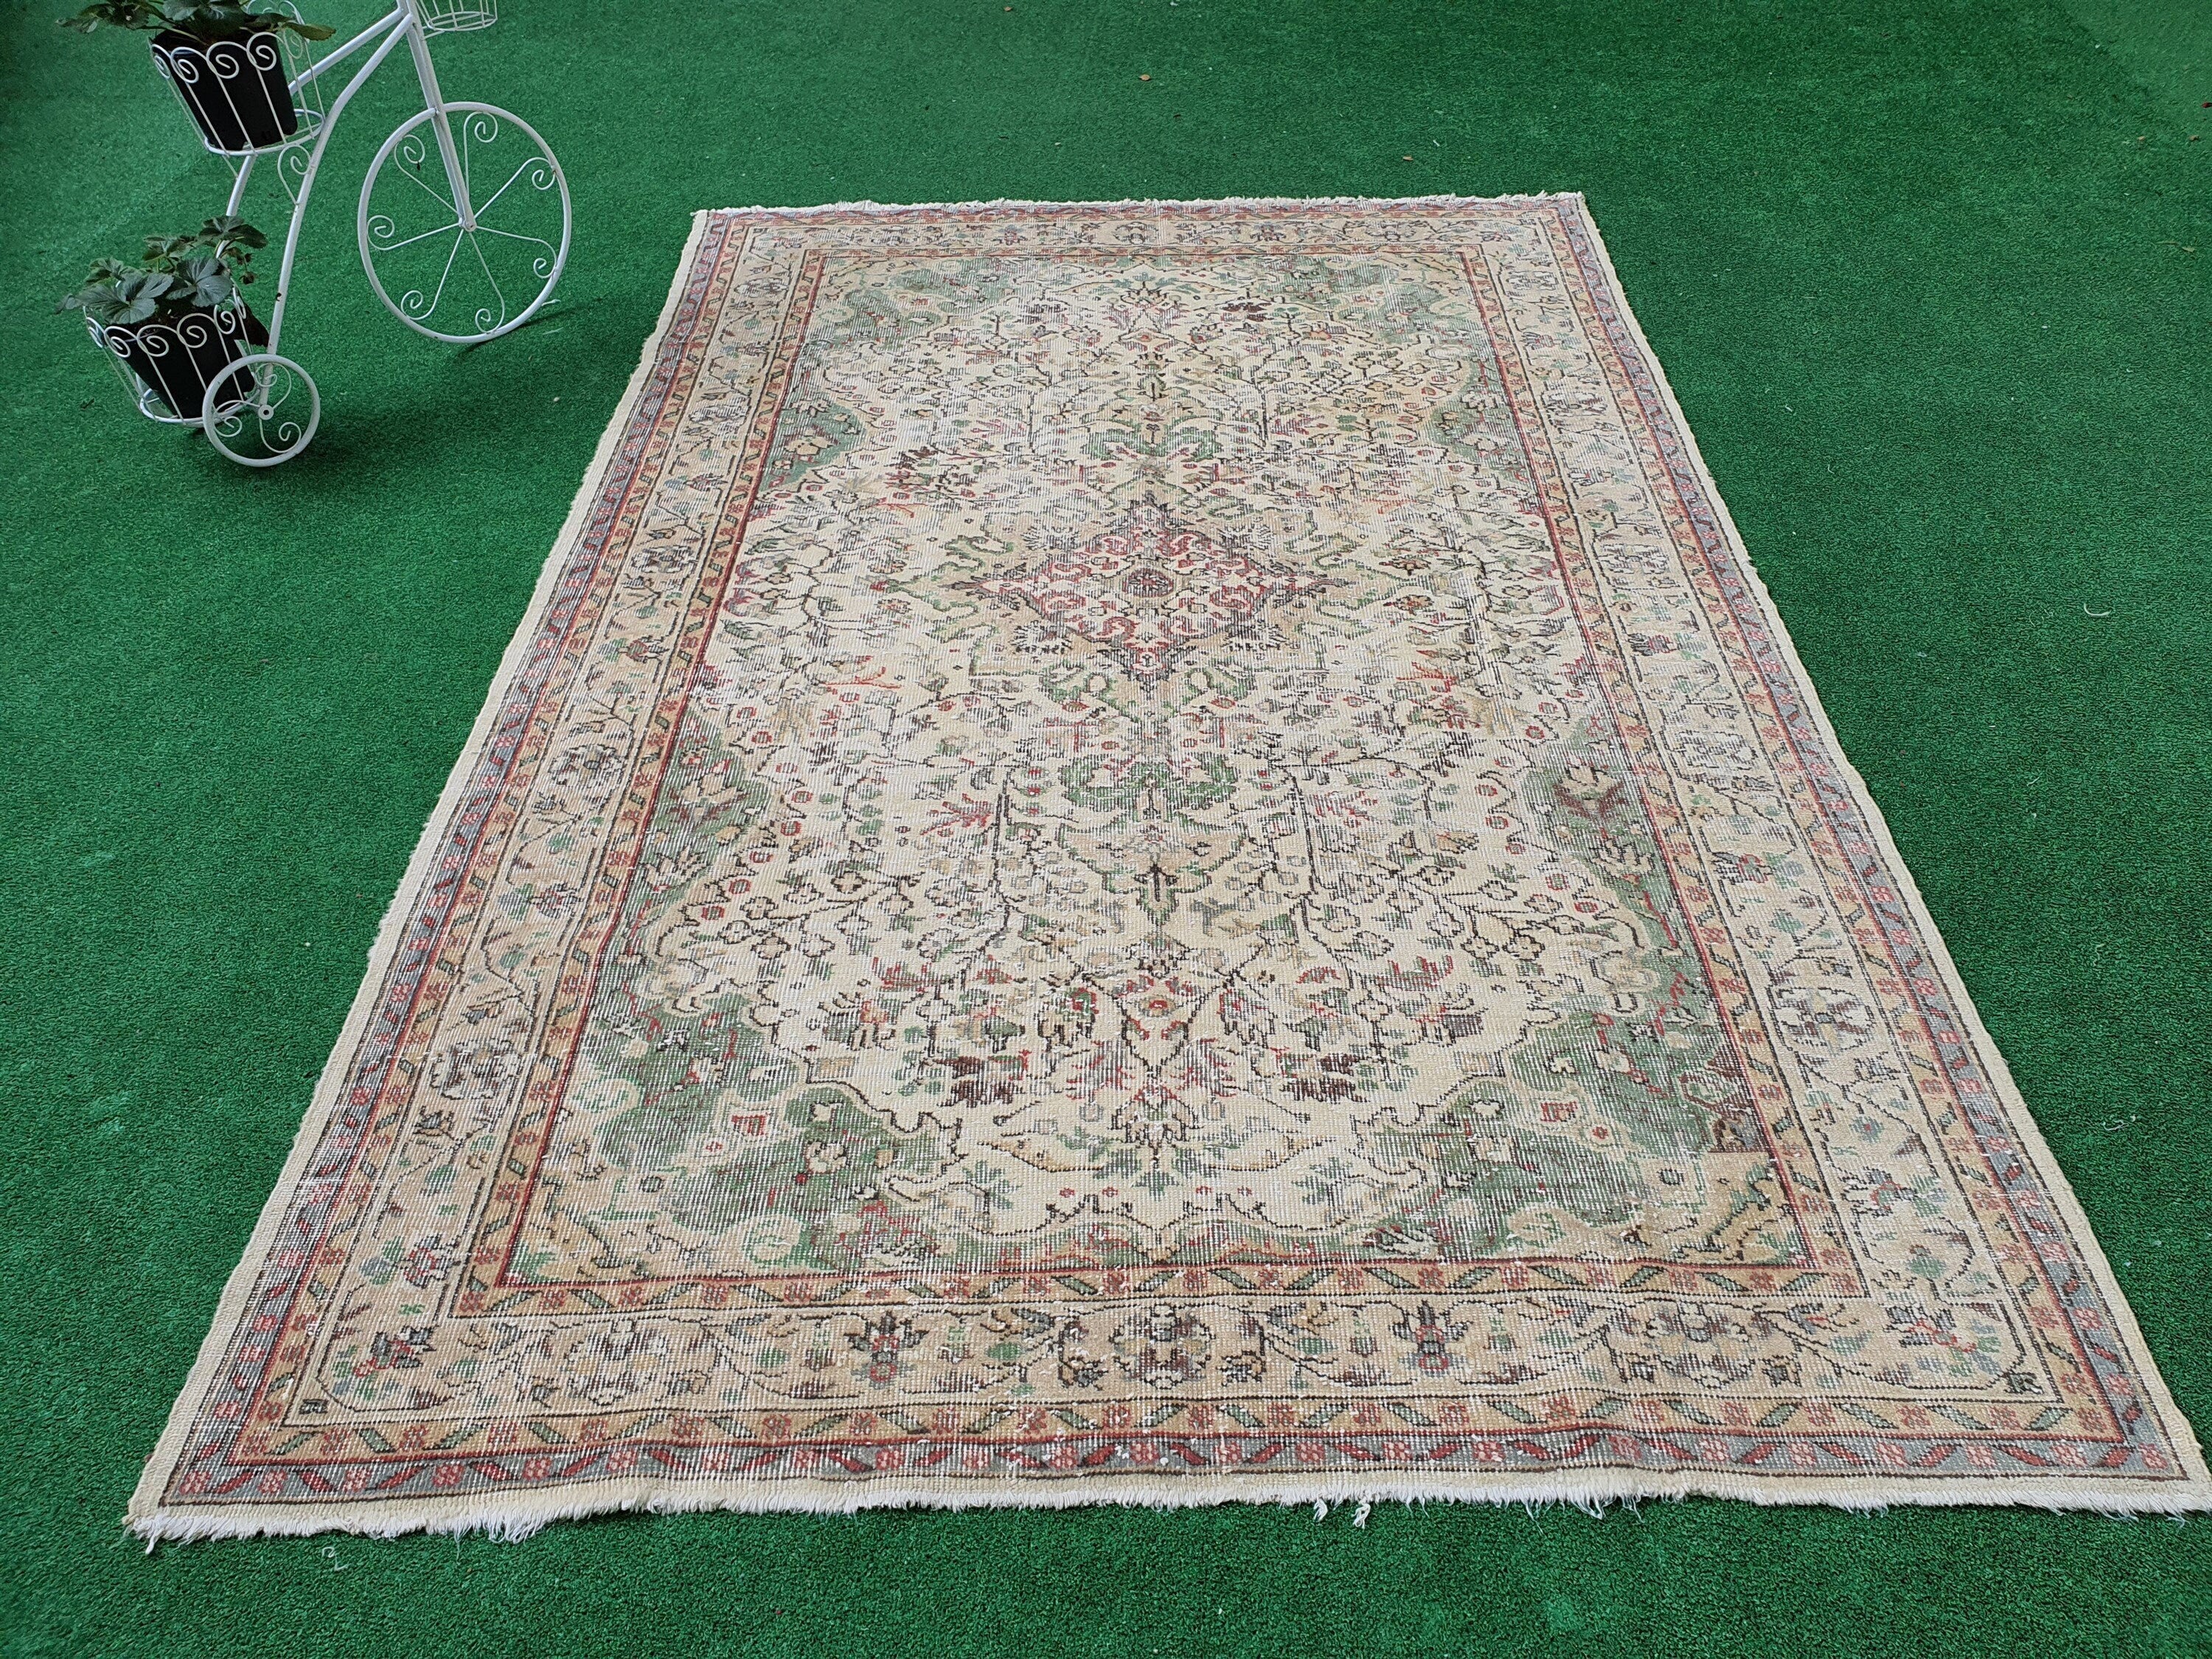 Pastel Antique Persian Area Rug 8 x 5 ft Vintage Beige Grey Handmade Natural Wool Floral Medallion Carpet, Distressed Bohemian Vintage Decor